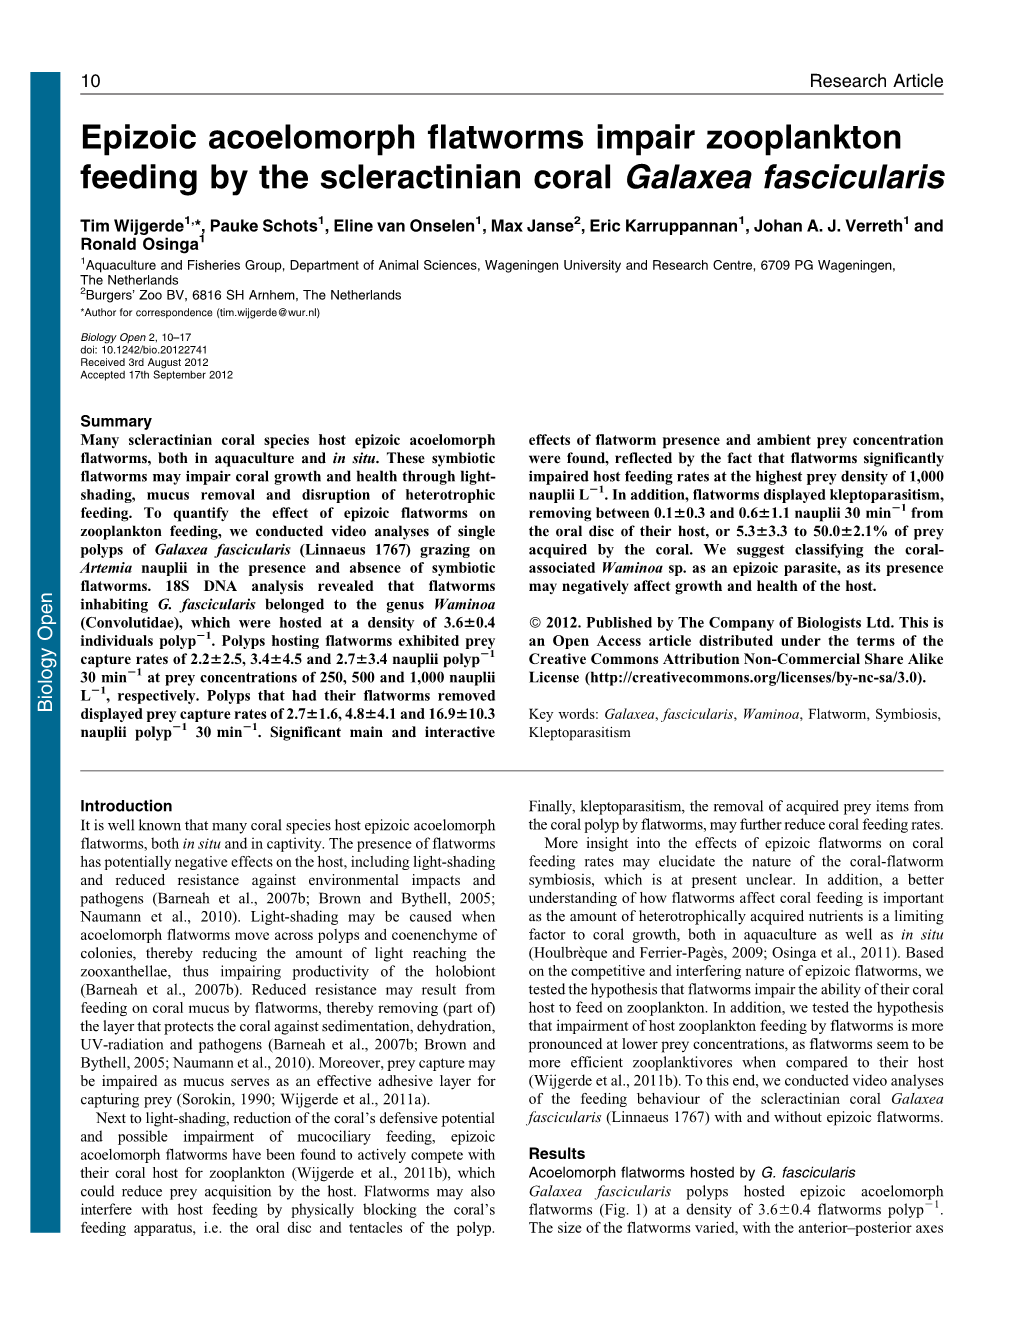 Epizoic Acoelomorph Flatworms Impair Zooplankton Feeding by the Scleractinian Coral Galaxea Fascicularis